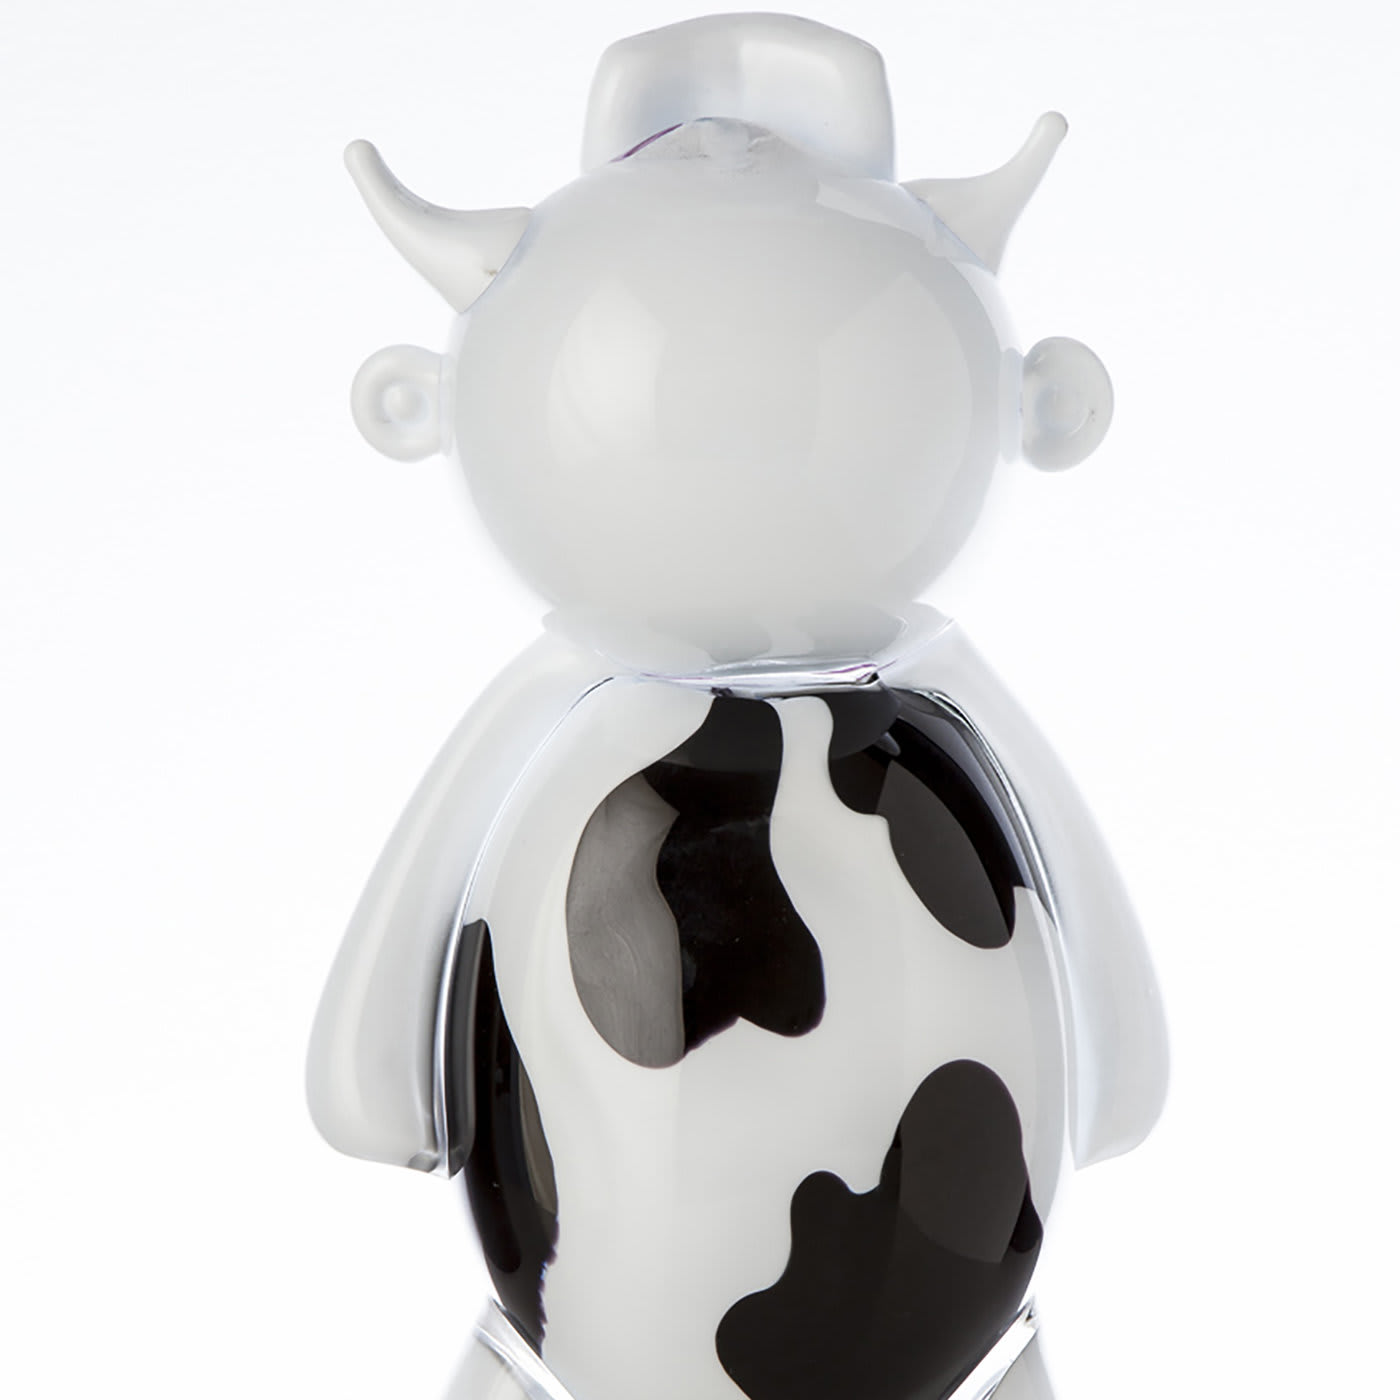 Nurse Cow Pop Comic Sculpture - Wave Murano Glass by Roberto Beltrami